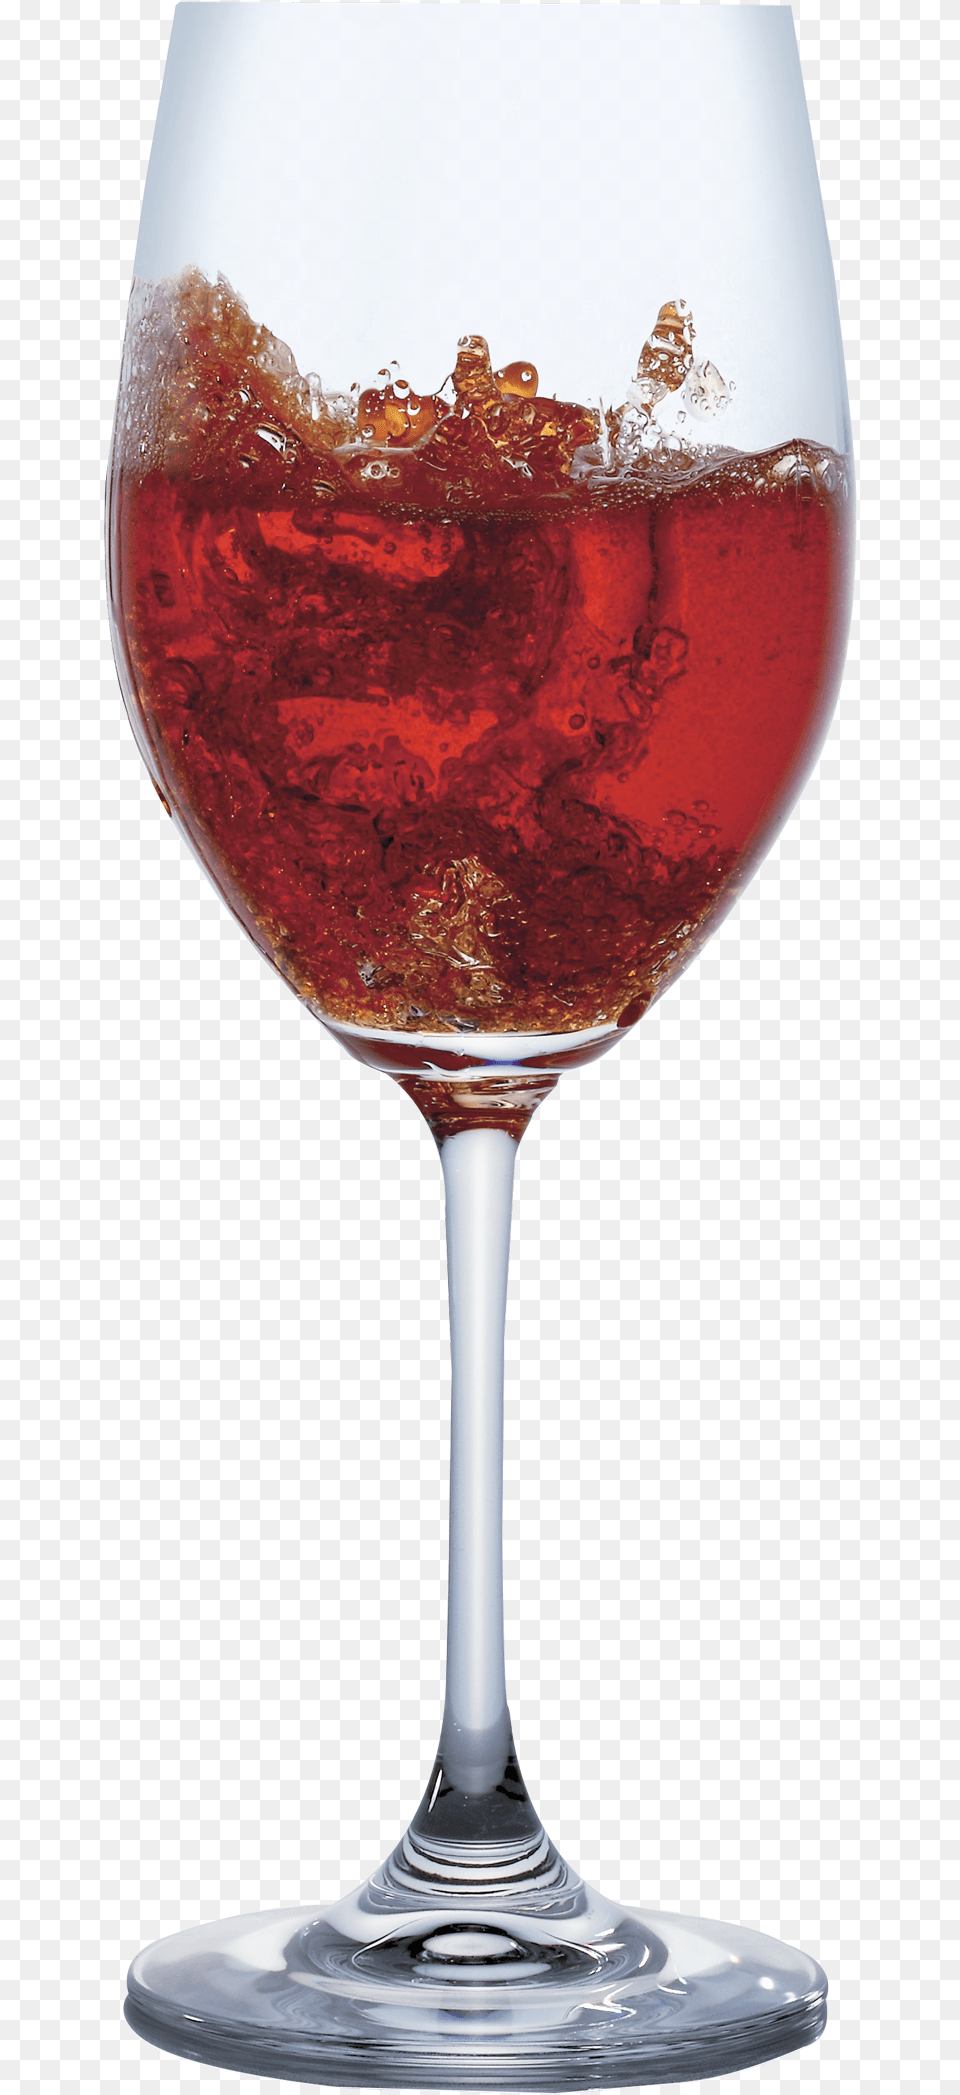 Transparent Wine Glass Svg Free Drink In Glass, Goblet, Alcohol, Beverage, Cocktail Png Image